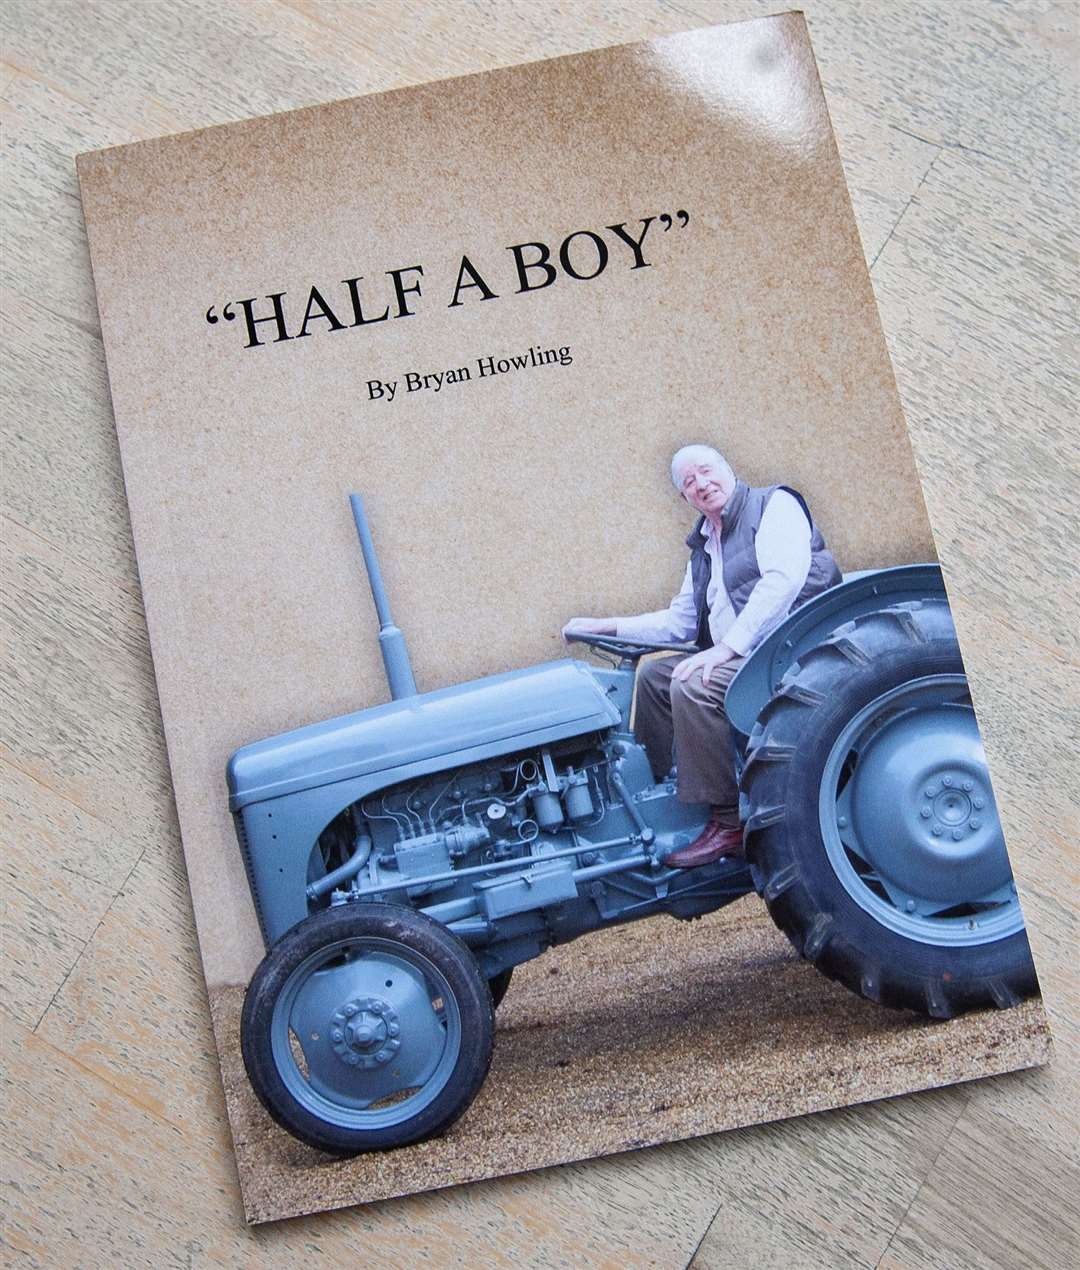 Half a Boy - Bryan Howling's autobiography